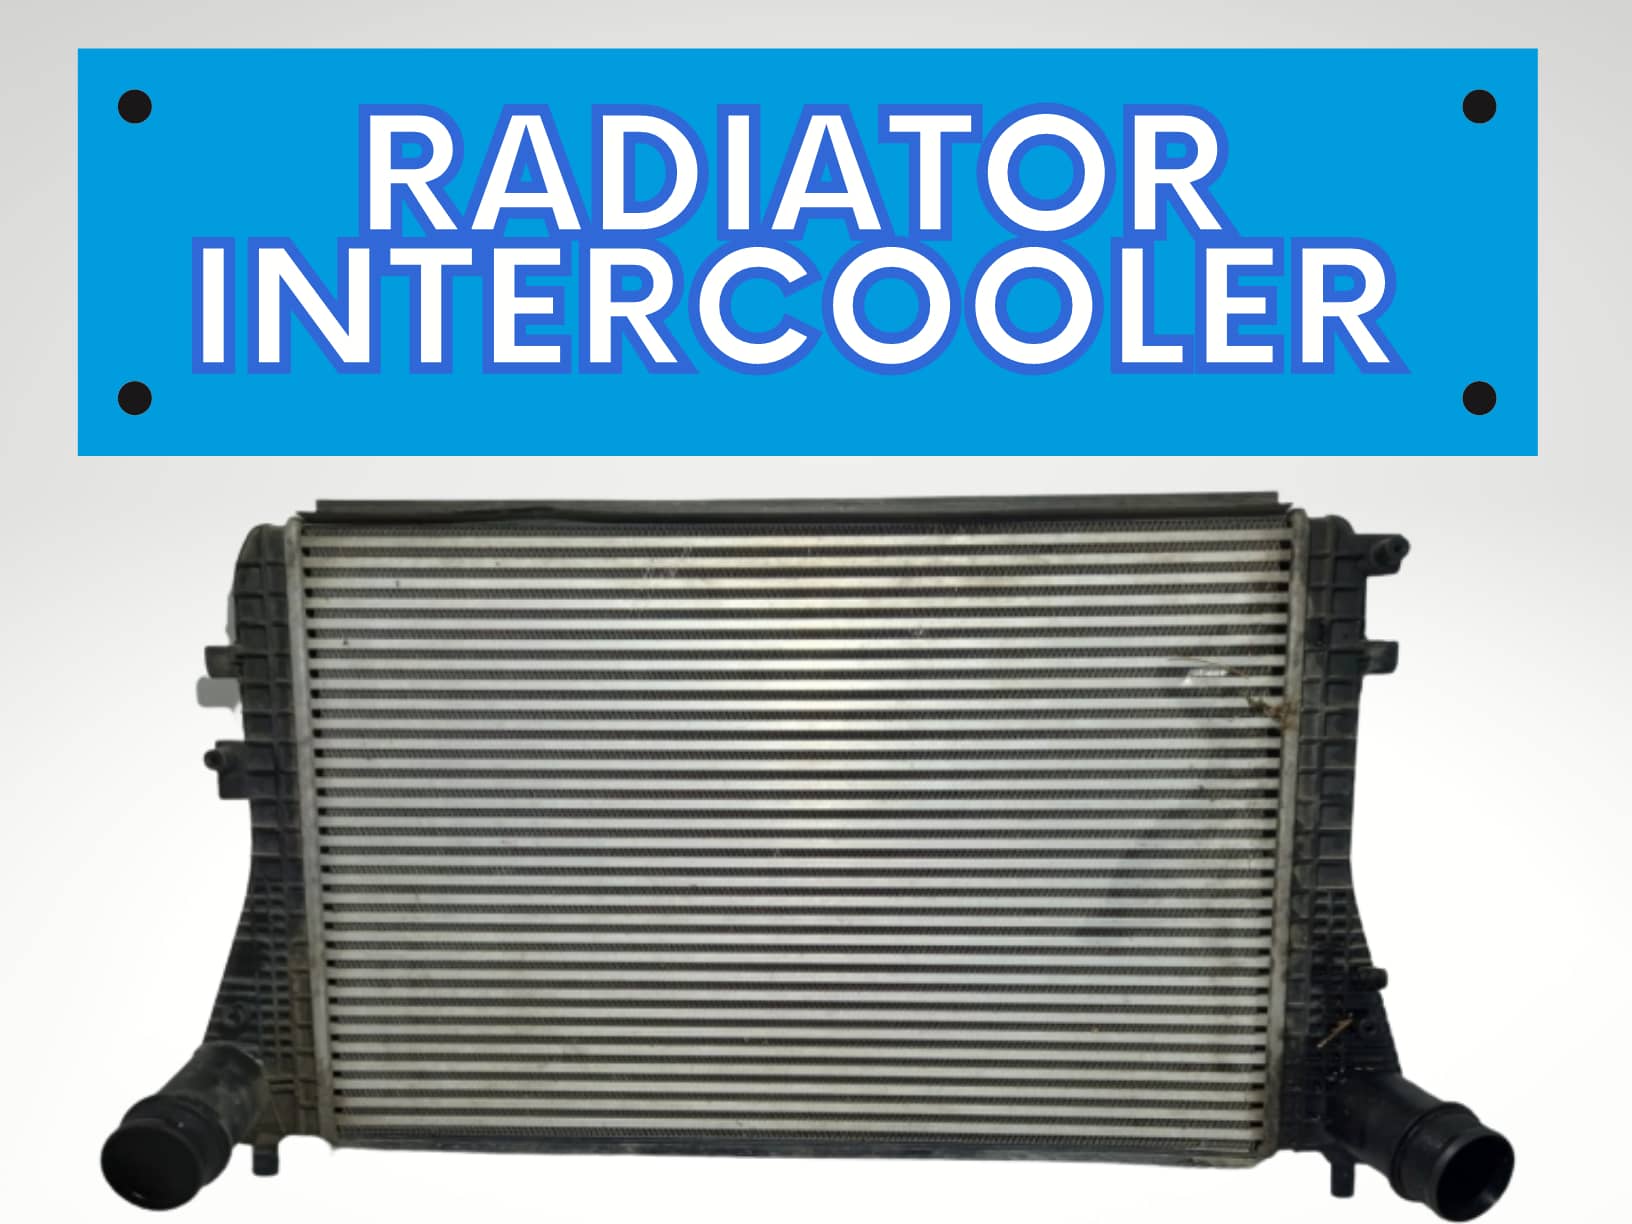 Radiator Intercooler